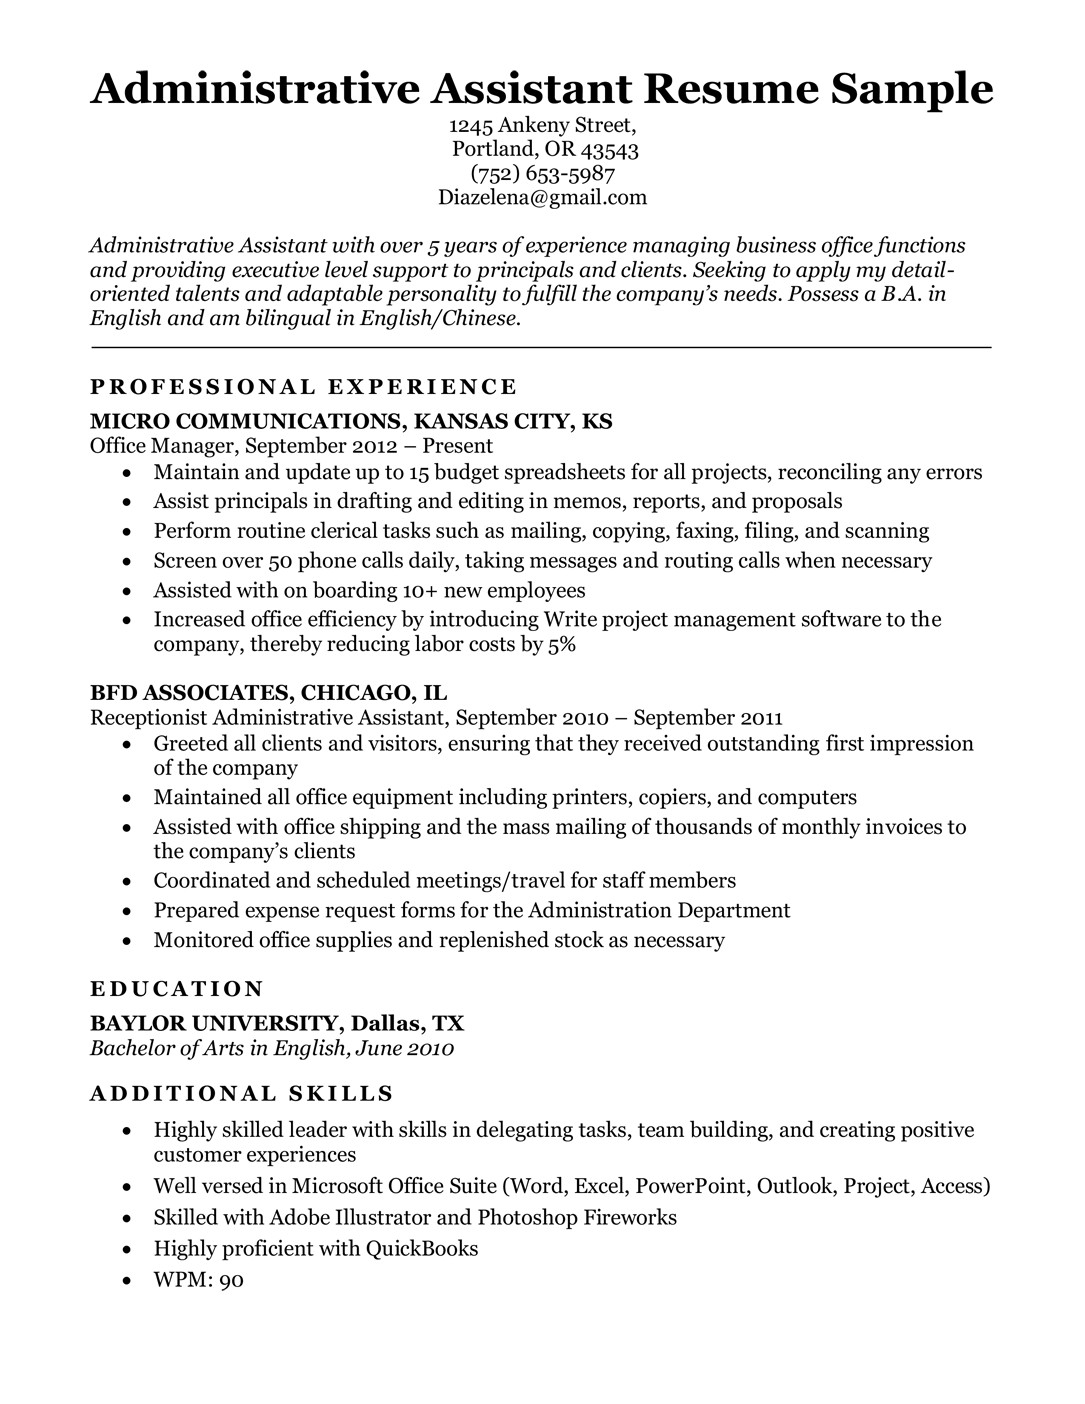 Executive assistant Job Description Resume Sample Admin assistant Resume Template